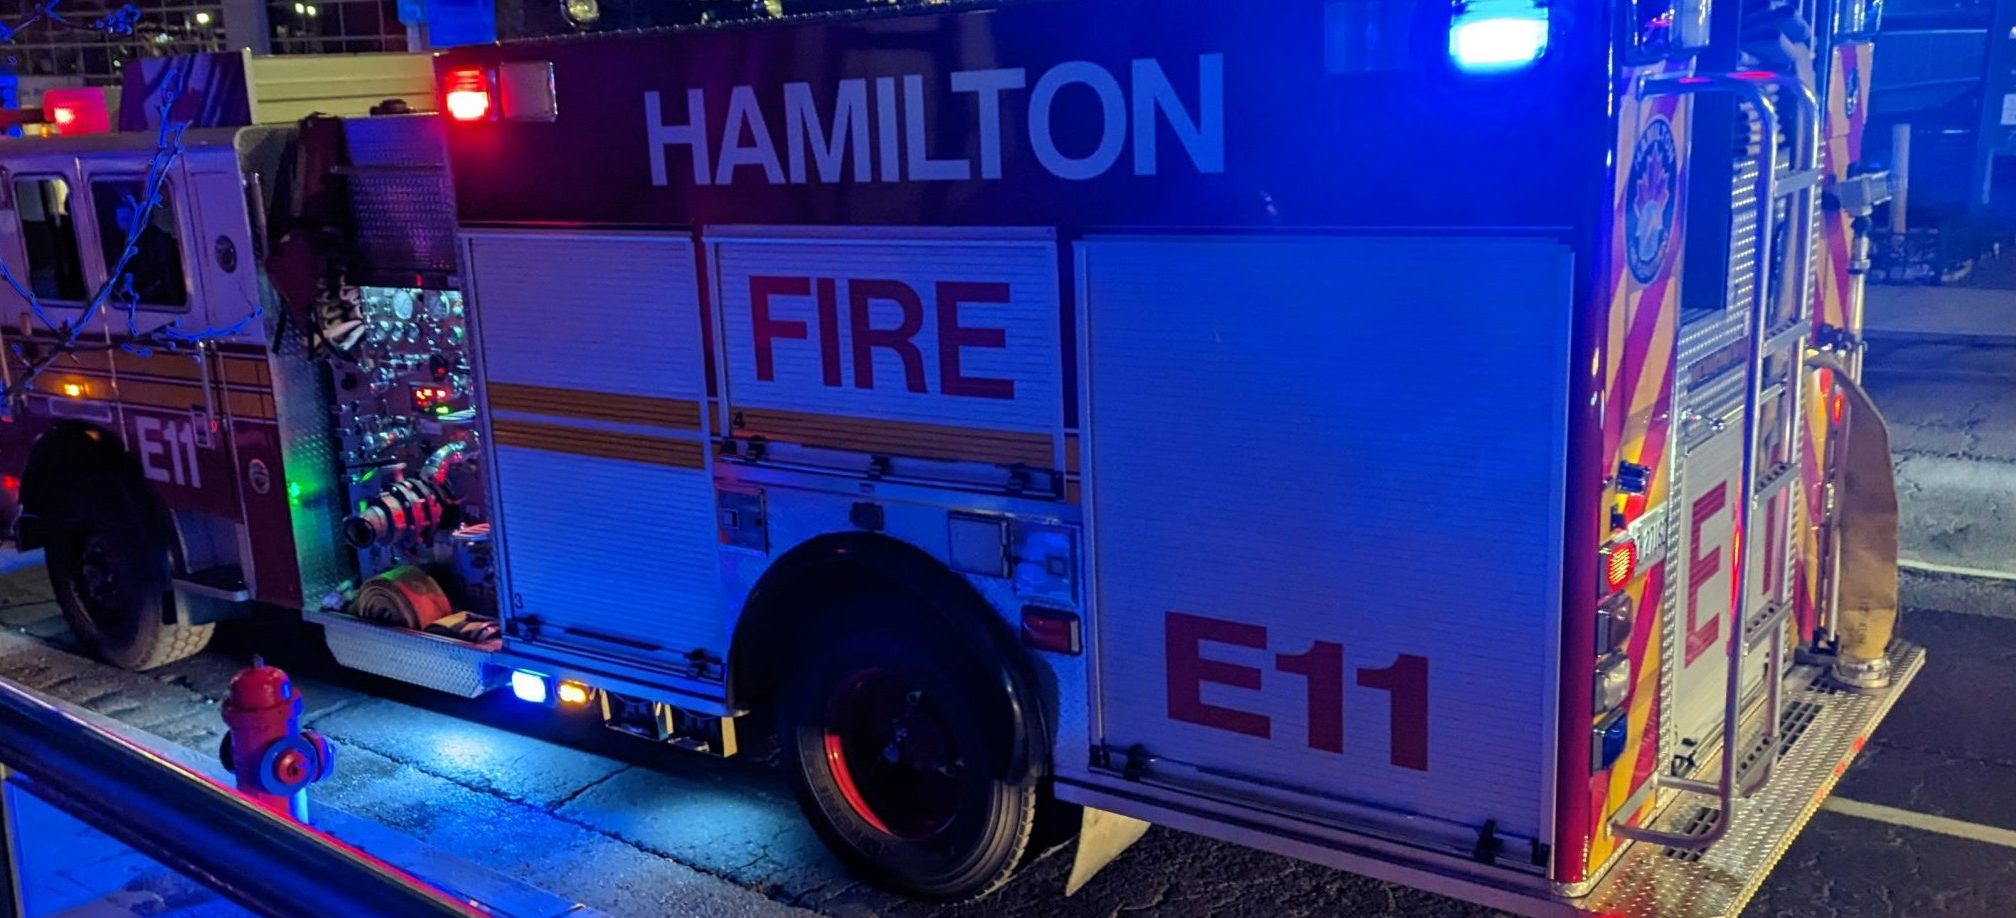 Hamilton fire department